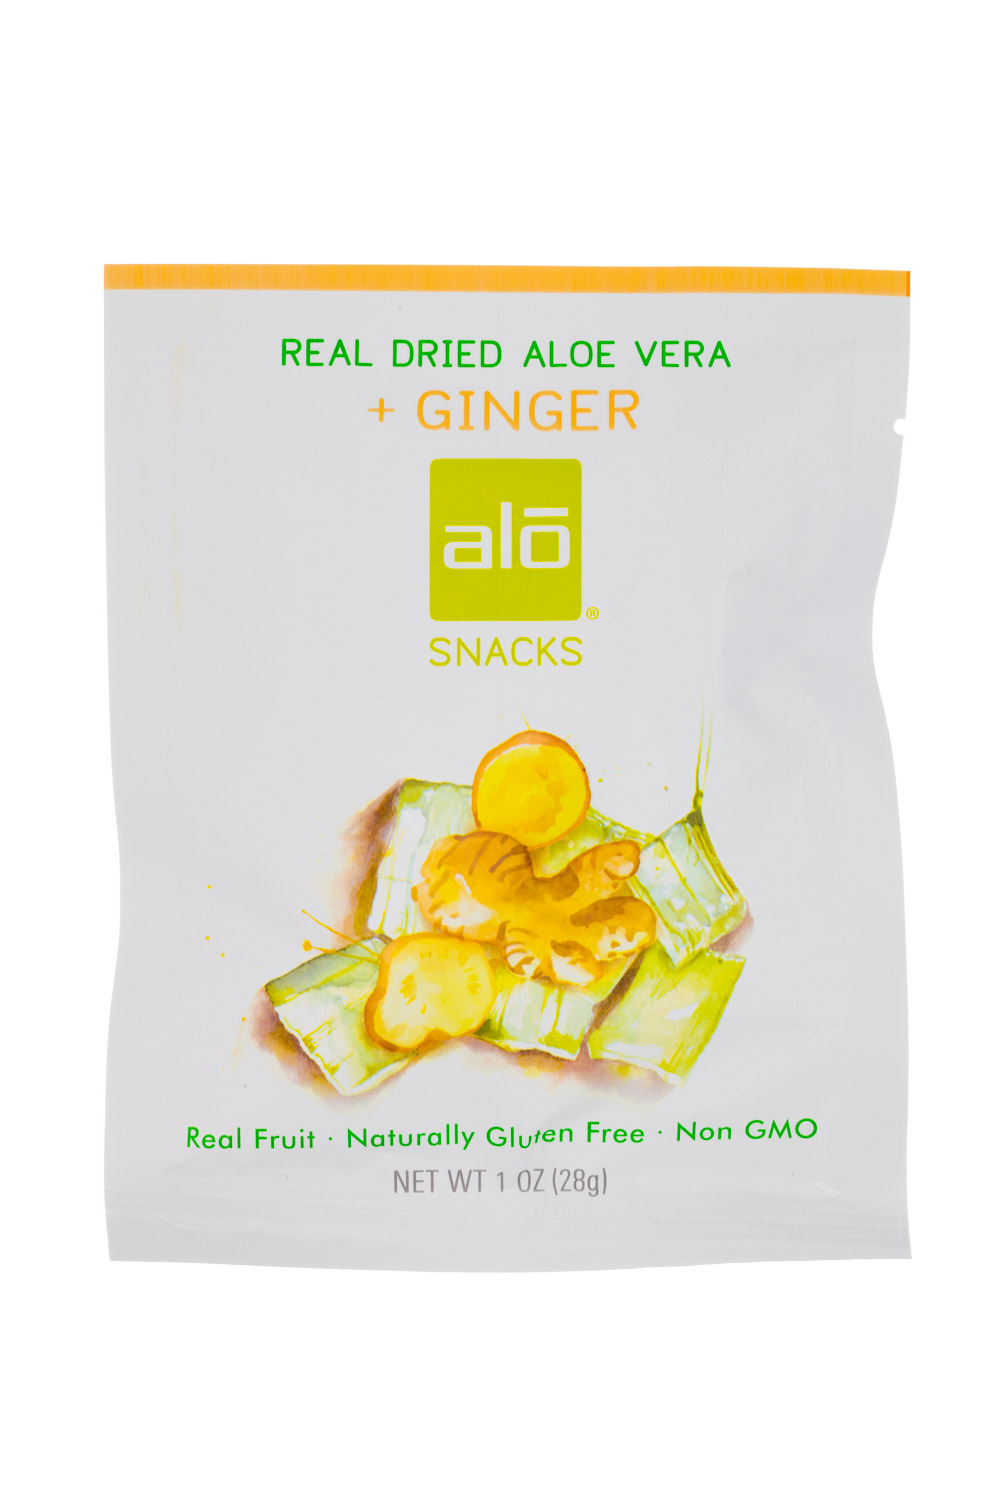 Real Dried Aloe Vera + Ginger